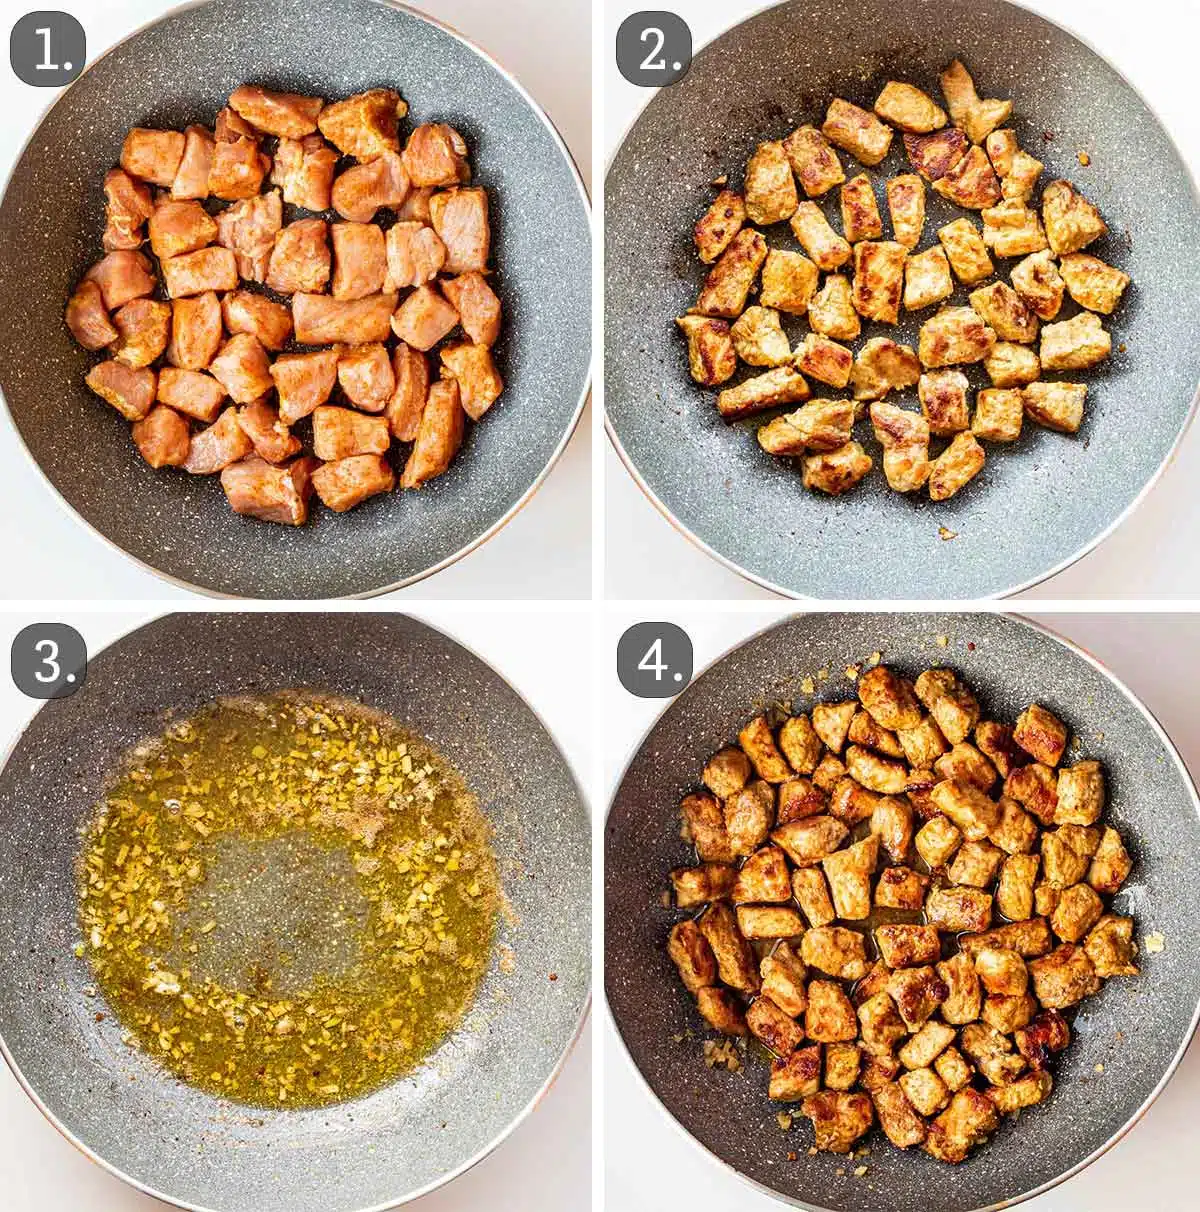 detailed process shots showing how to make cajun pork bites.